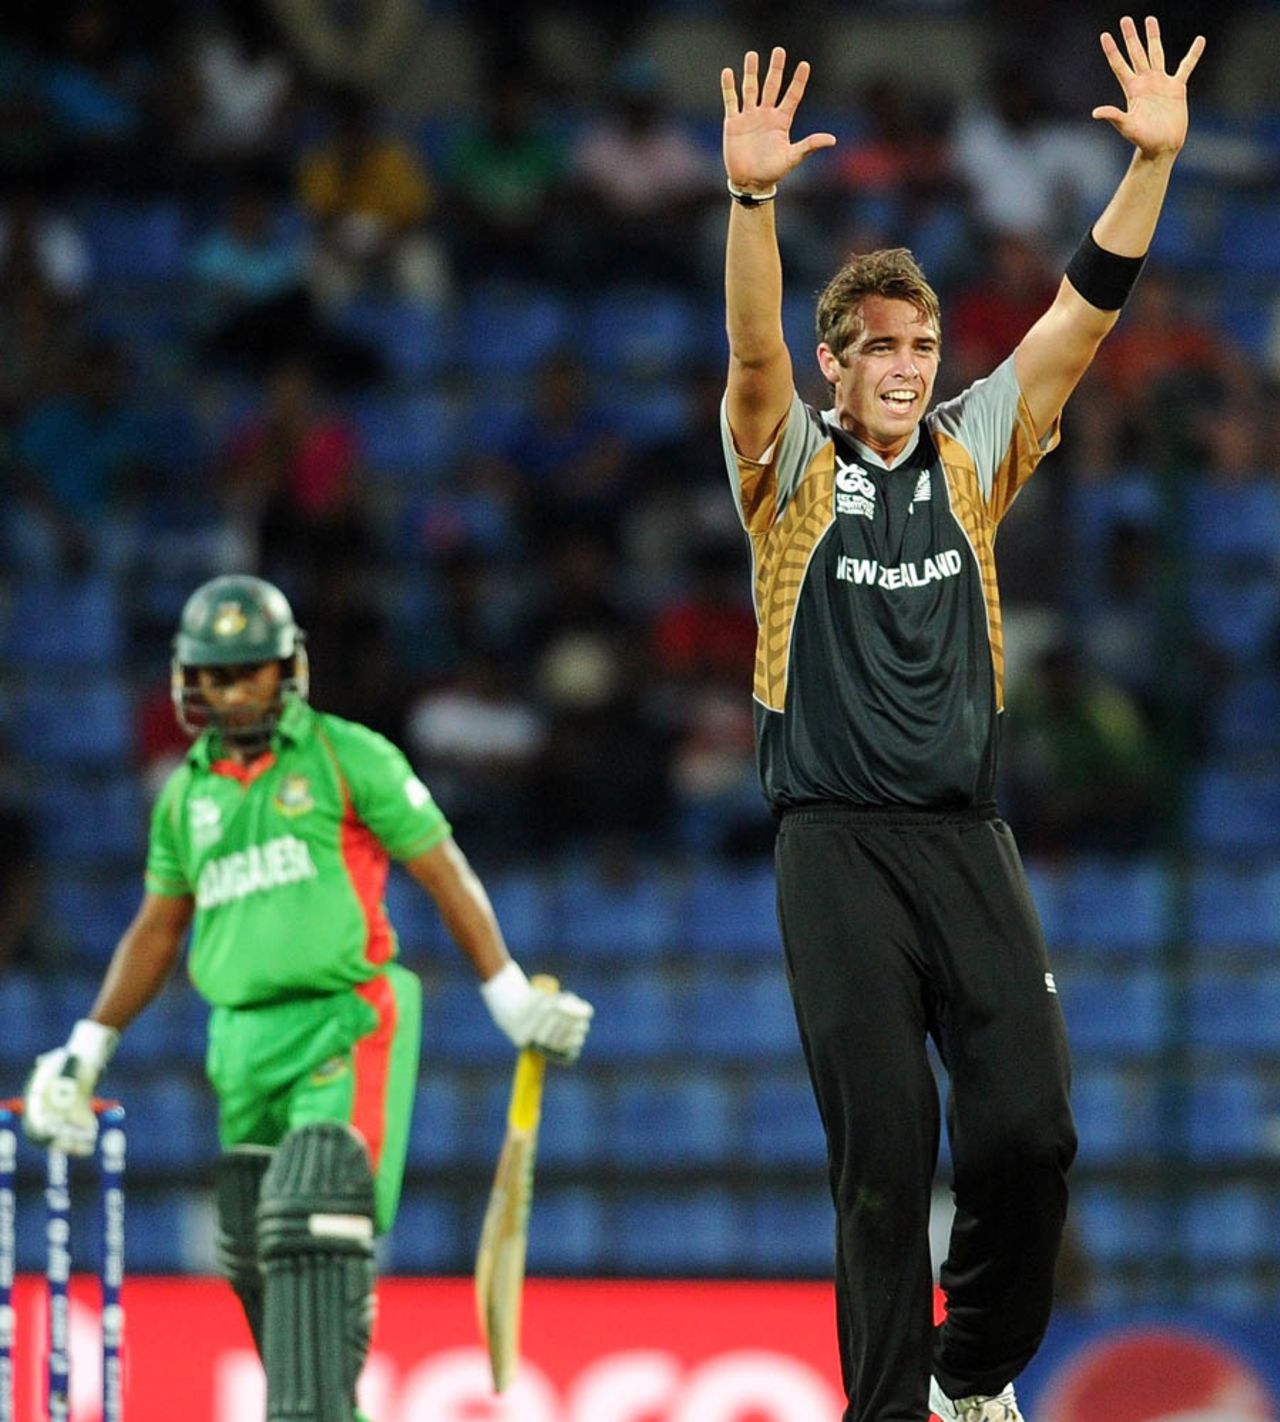 Tim Southee appeals for lbw against Mohammad Ashraful, Bangladesh v New Zealand, World Twenty20 2012, Group D, Pallekele, September 21, 2012